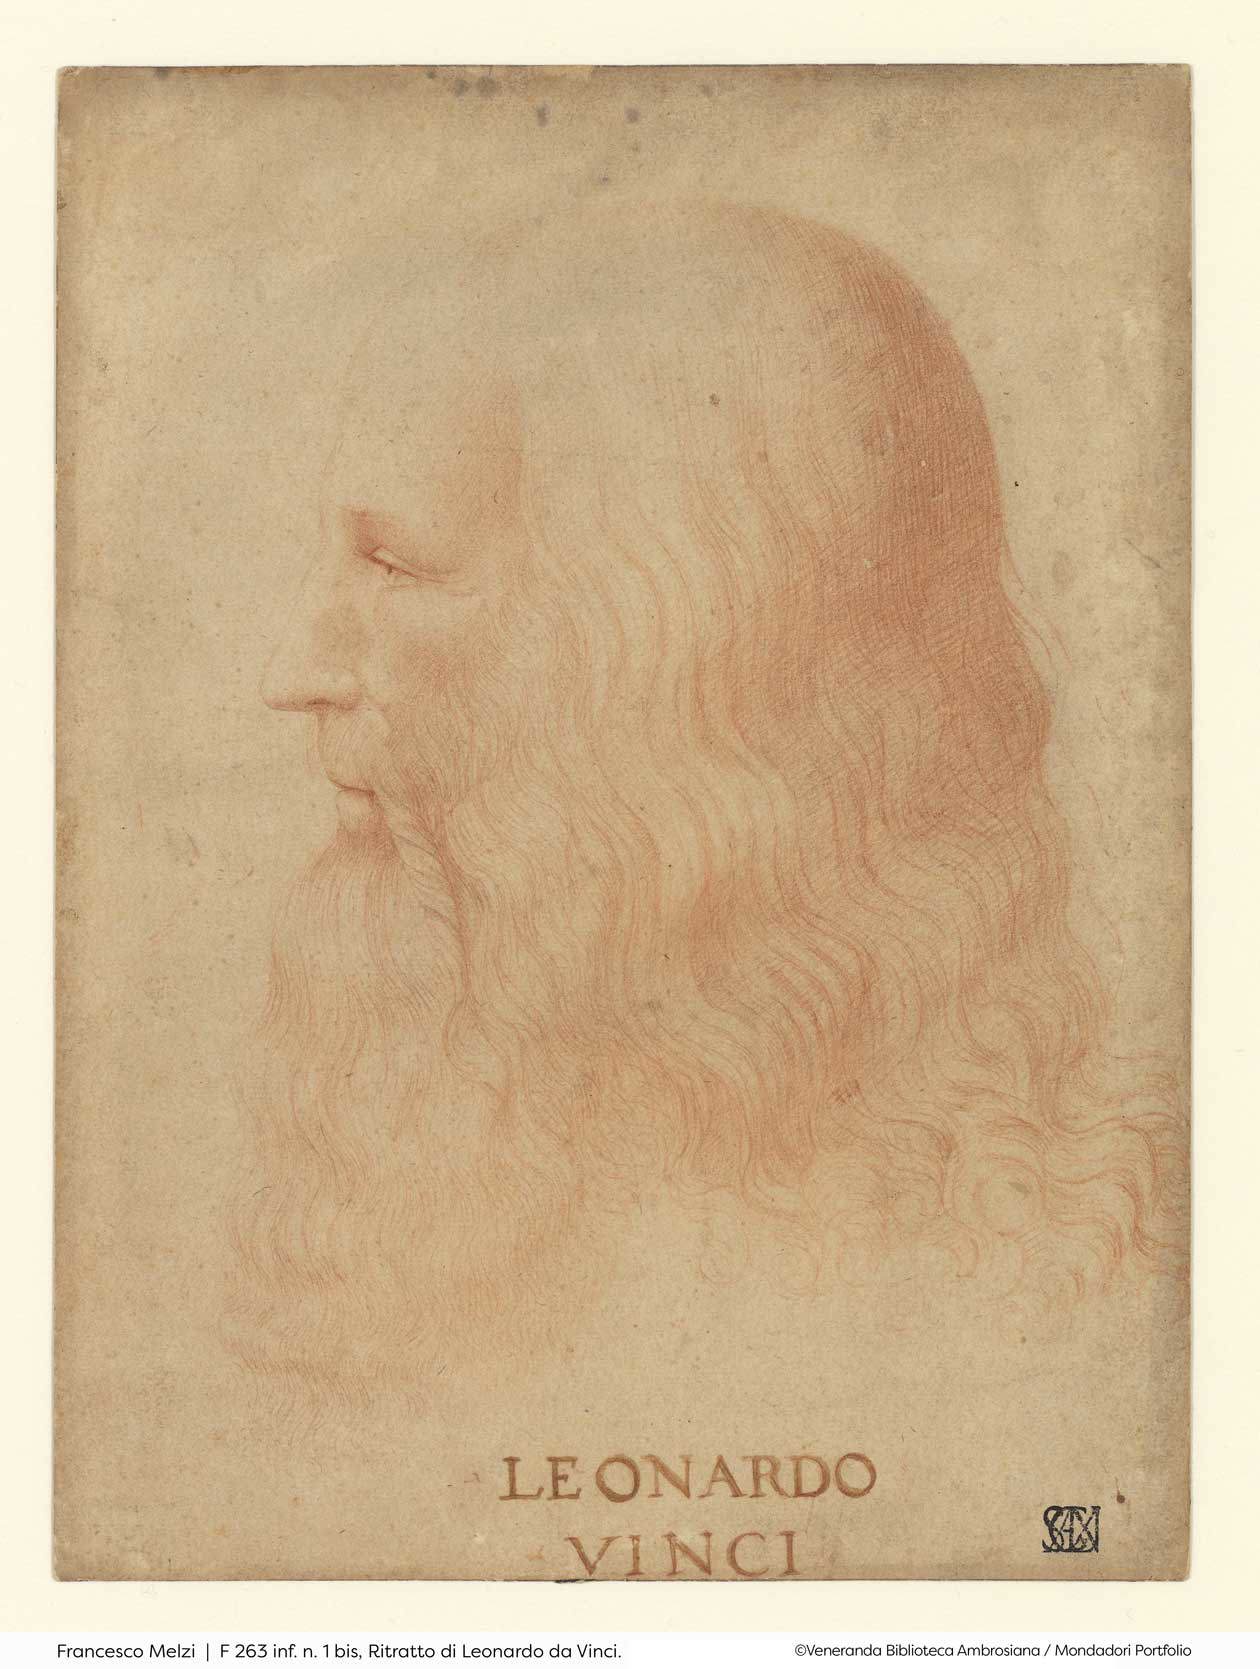 Francesco Melzi, Ritratto di Leonardo da Vinci. Copyright © Veneranda Biblioteca Ambrosiana / Mondadori Portfolio.